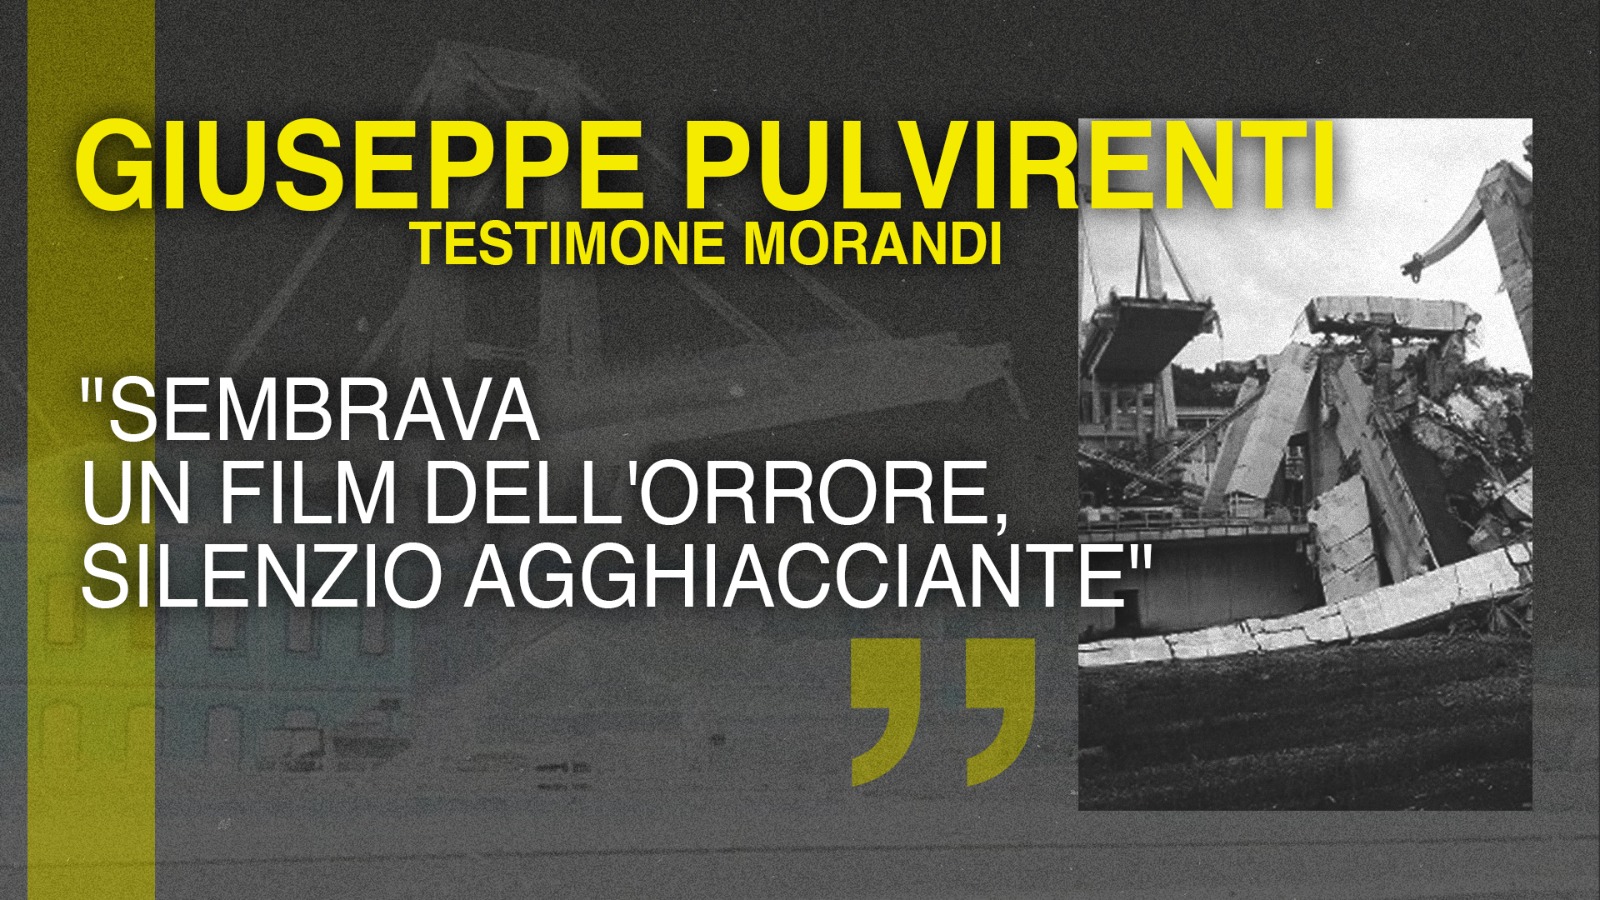 Testimoni Morandi, Pulvirenti: 